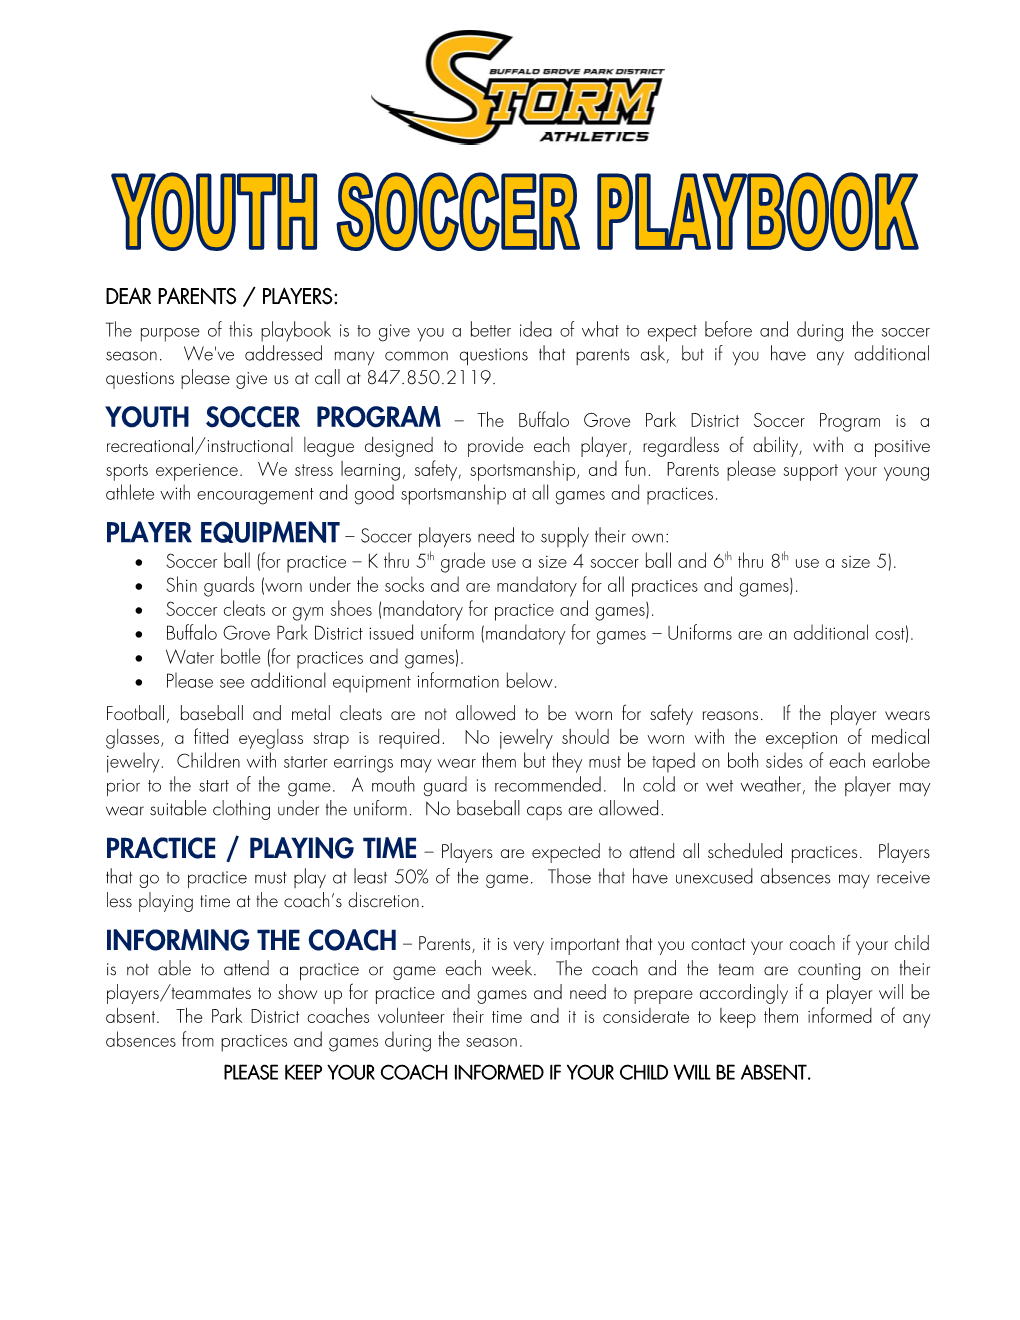 Parent/Player Information Handbook